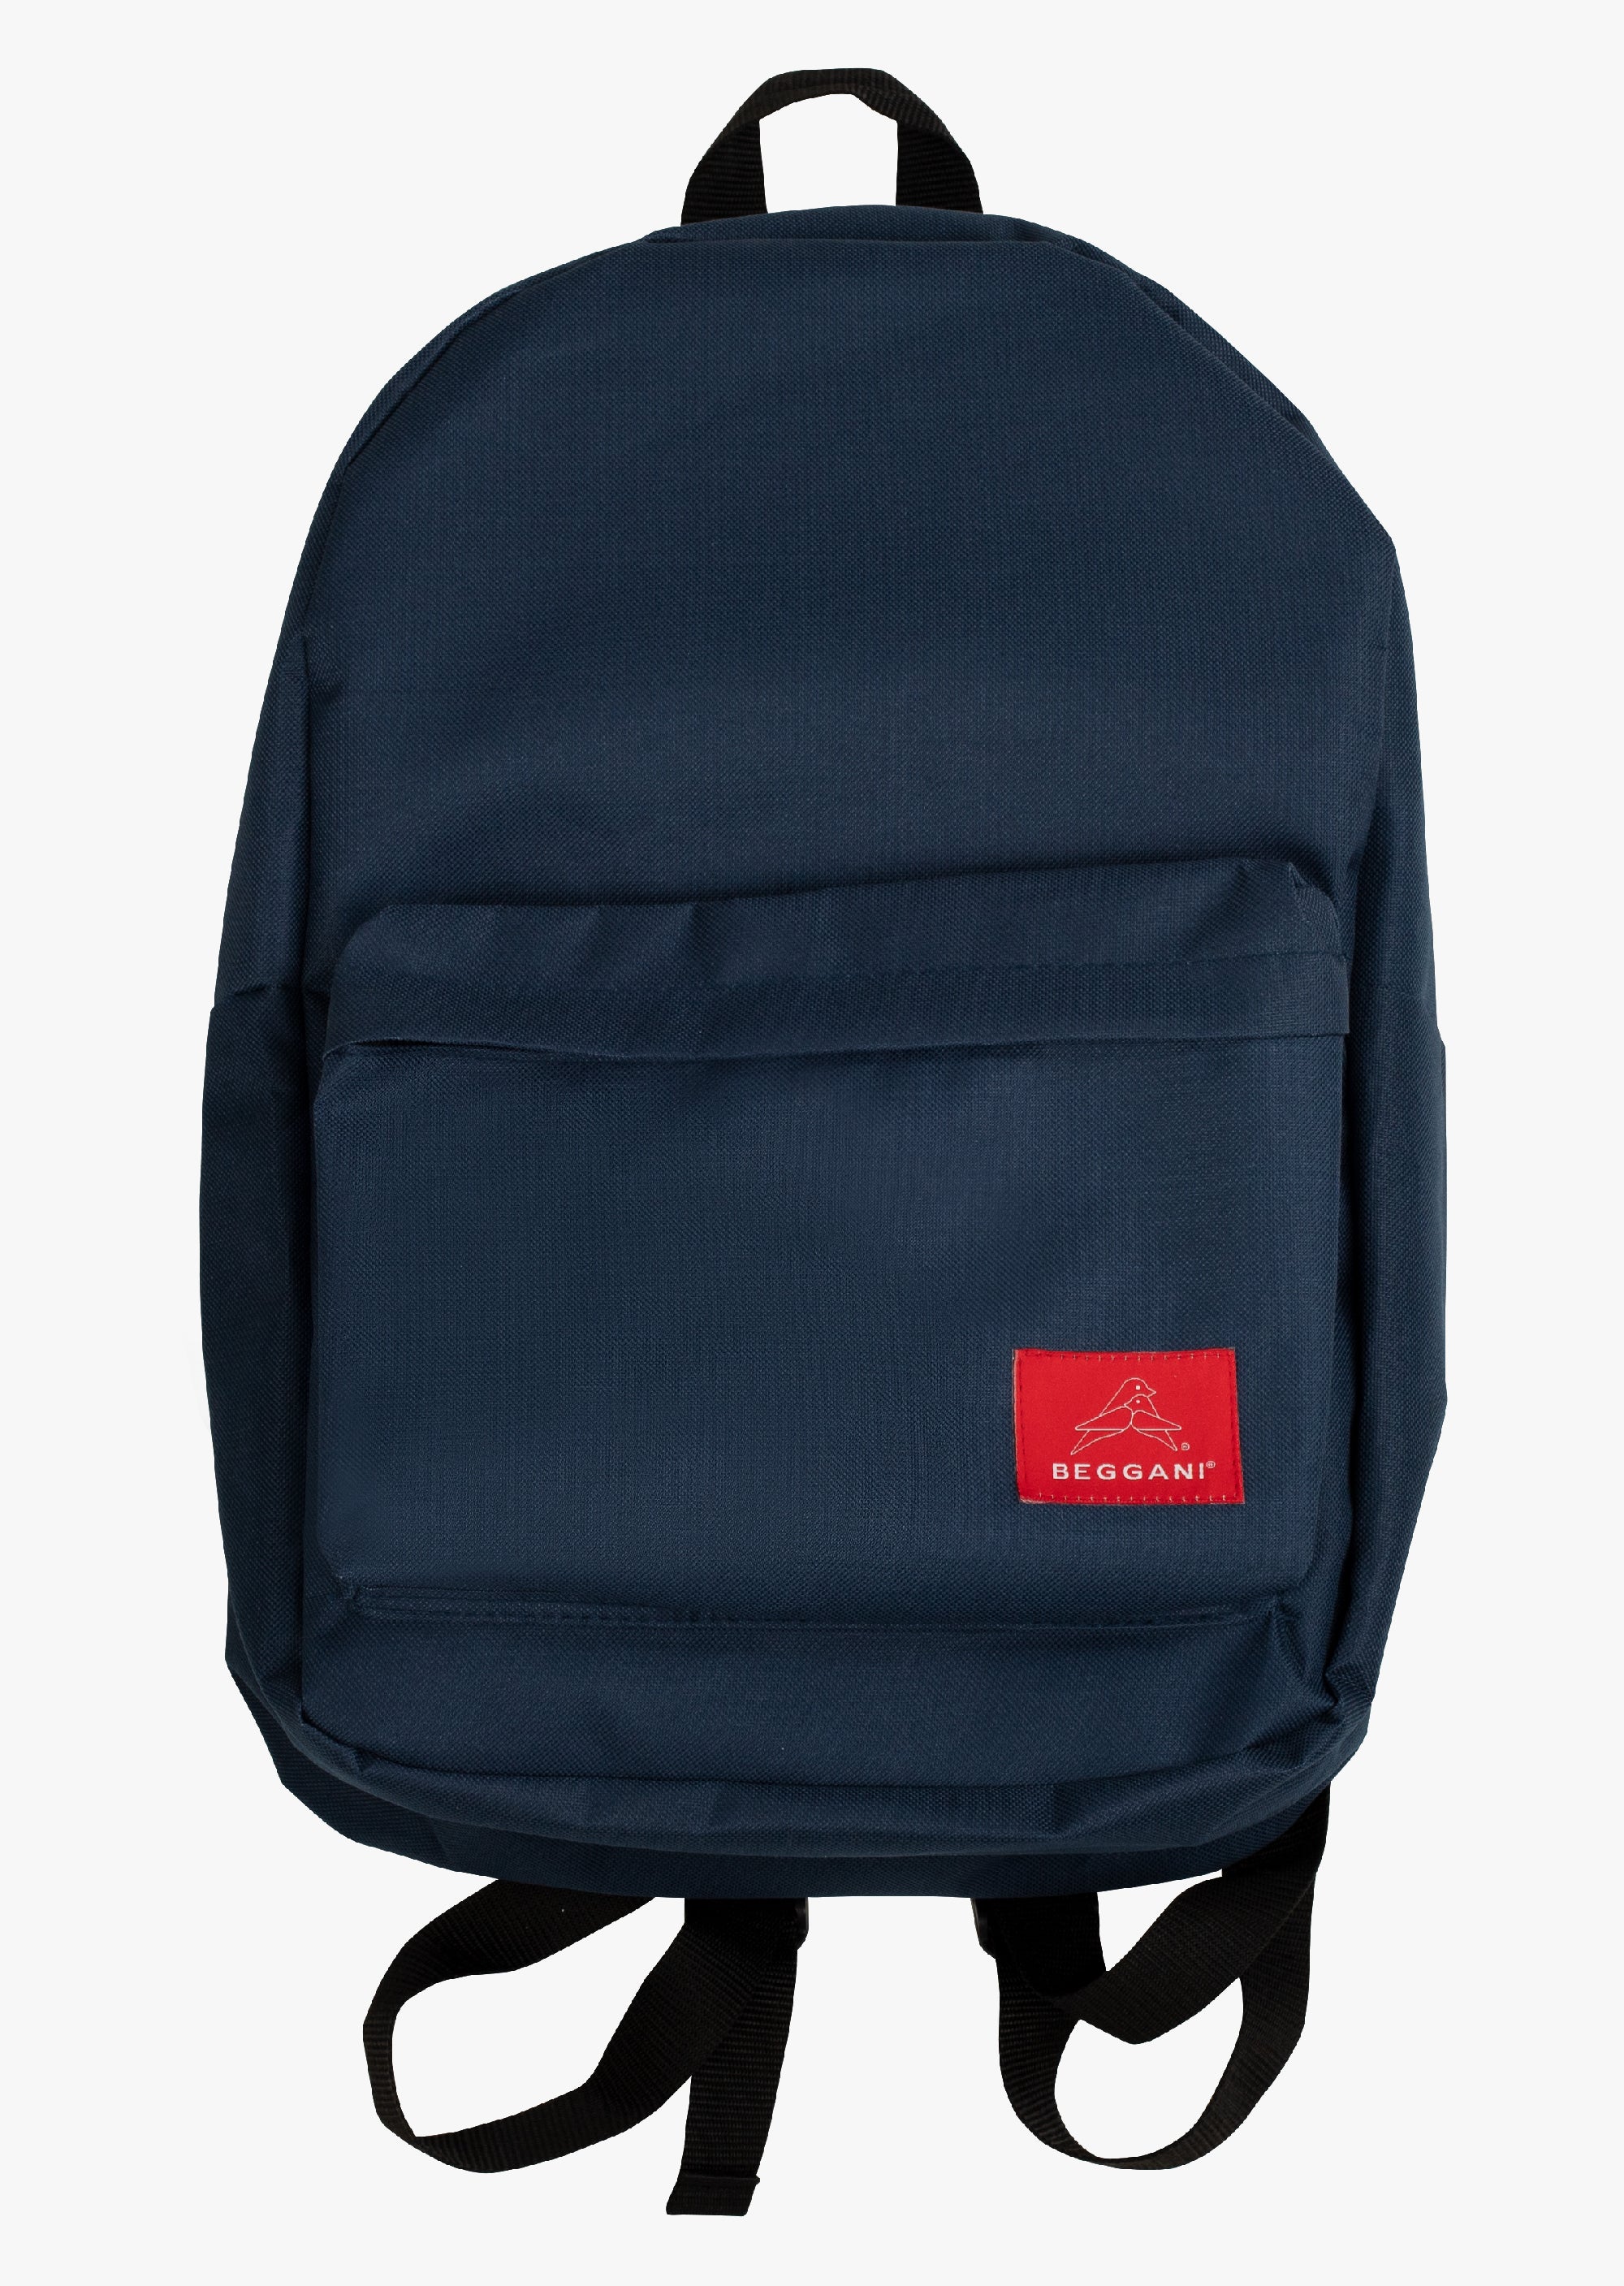 Backpack with logo BEGGANI